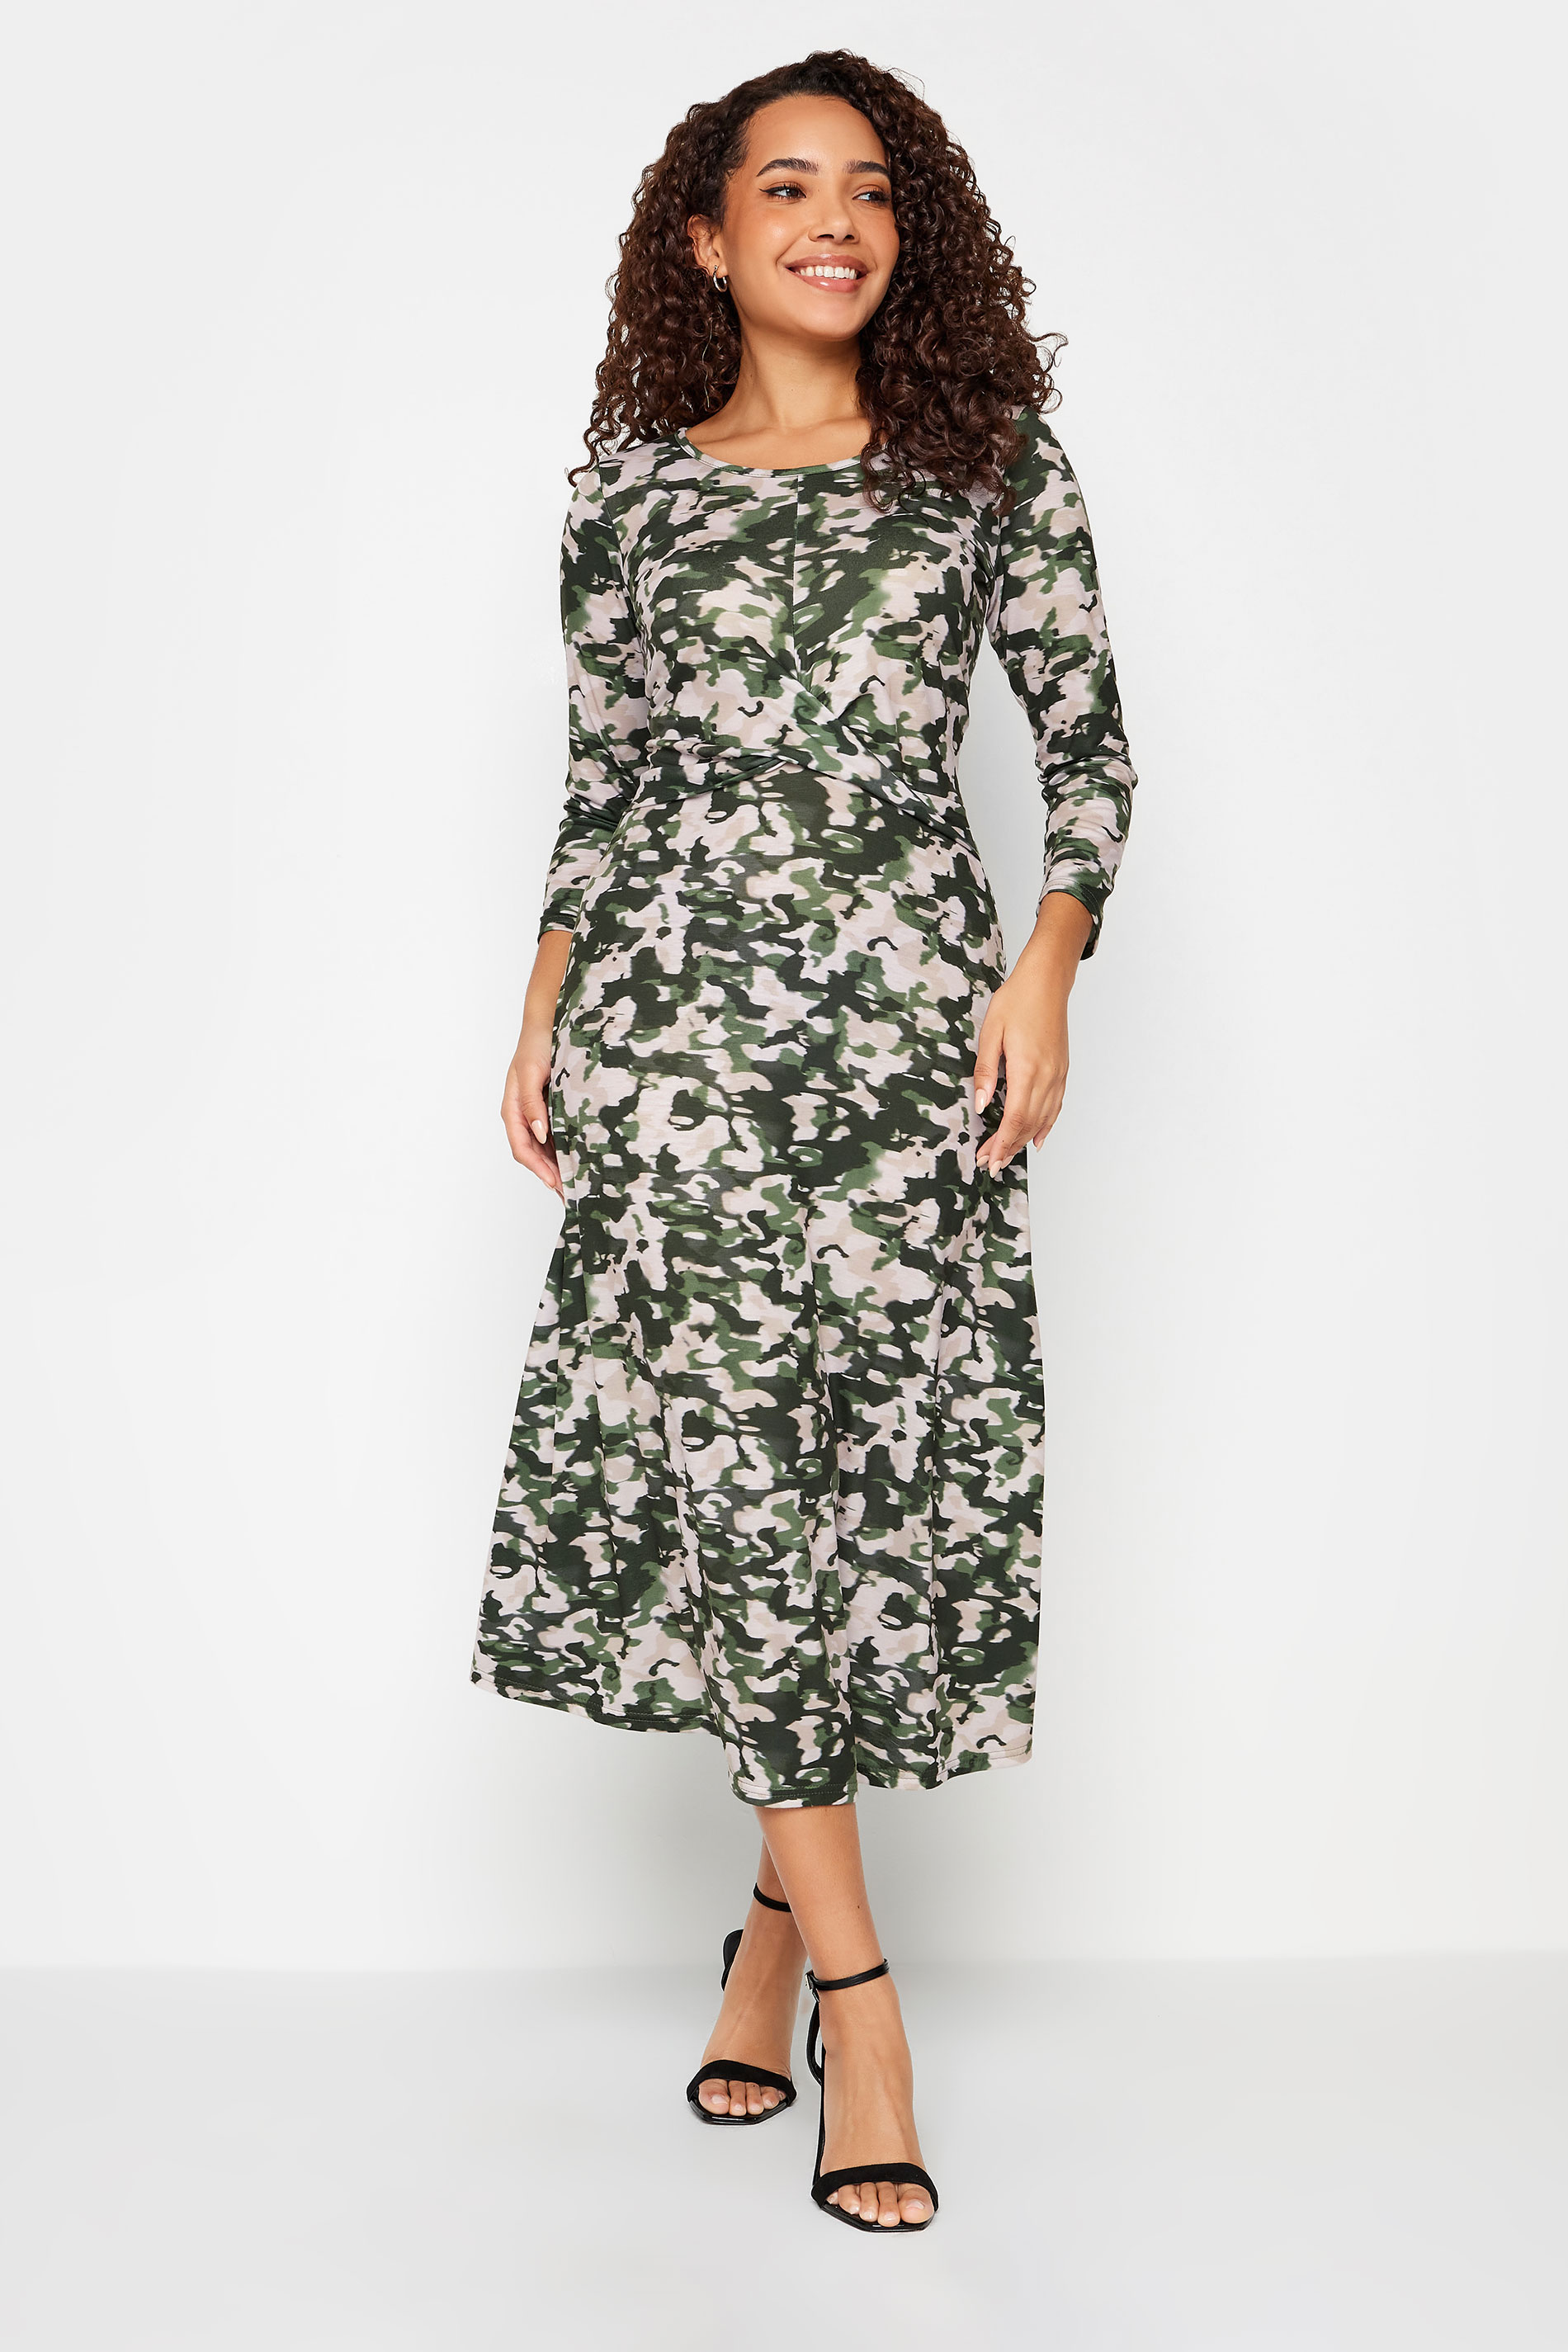 M&Co Khaki Green Abstract Print Twist Front Midaxi Dress 2